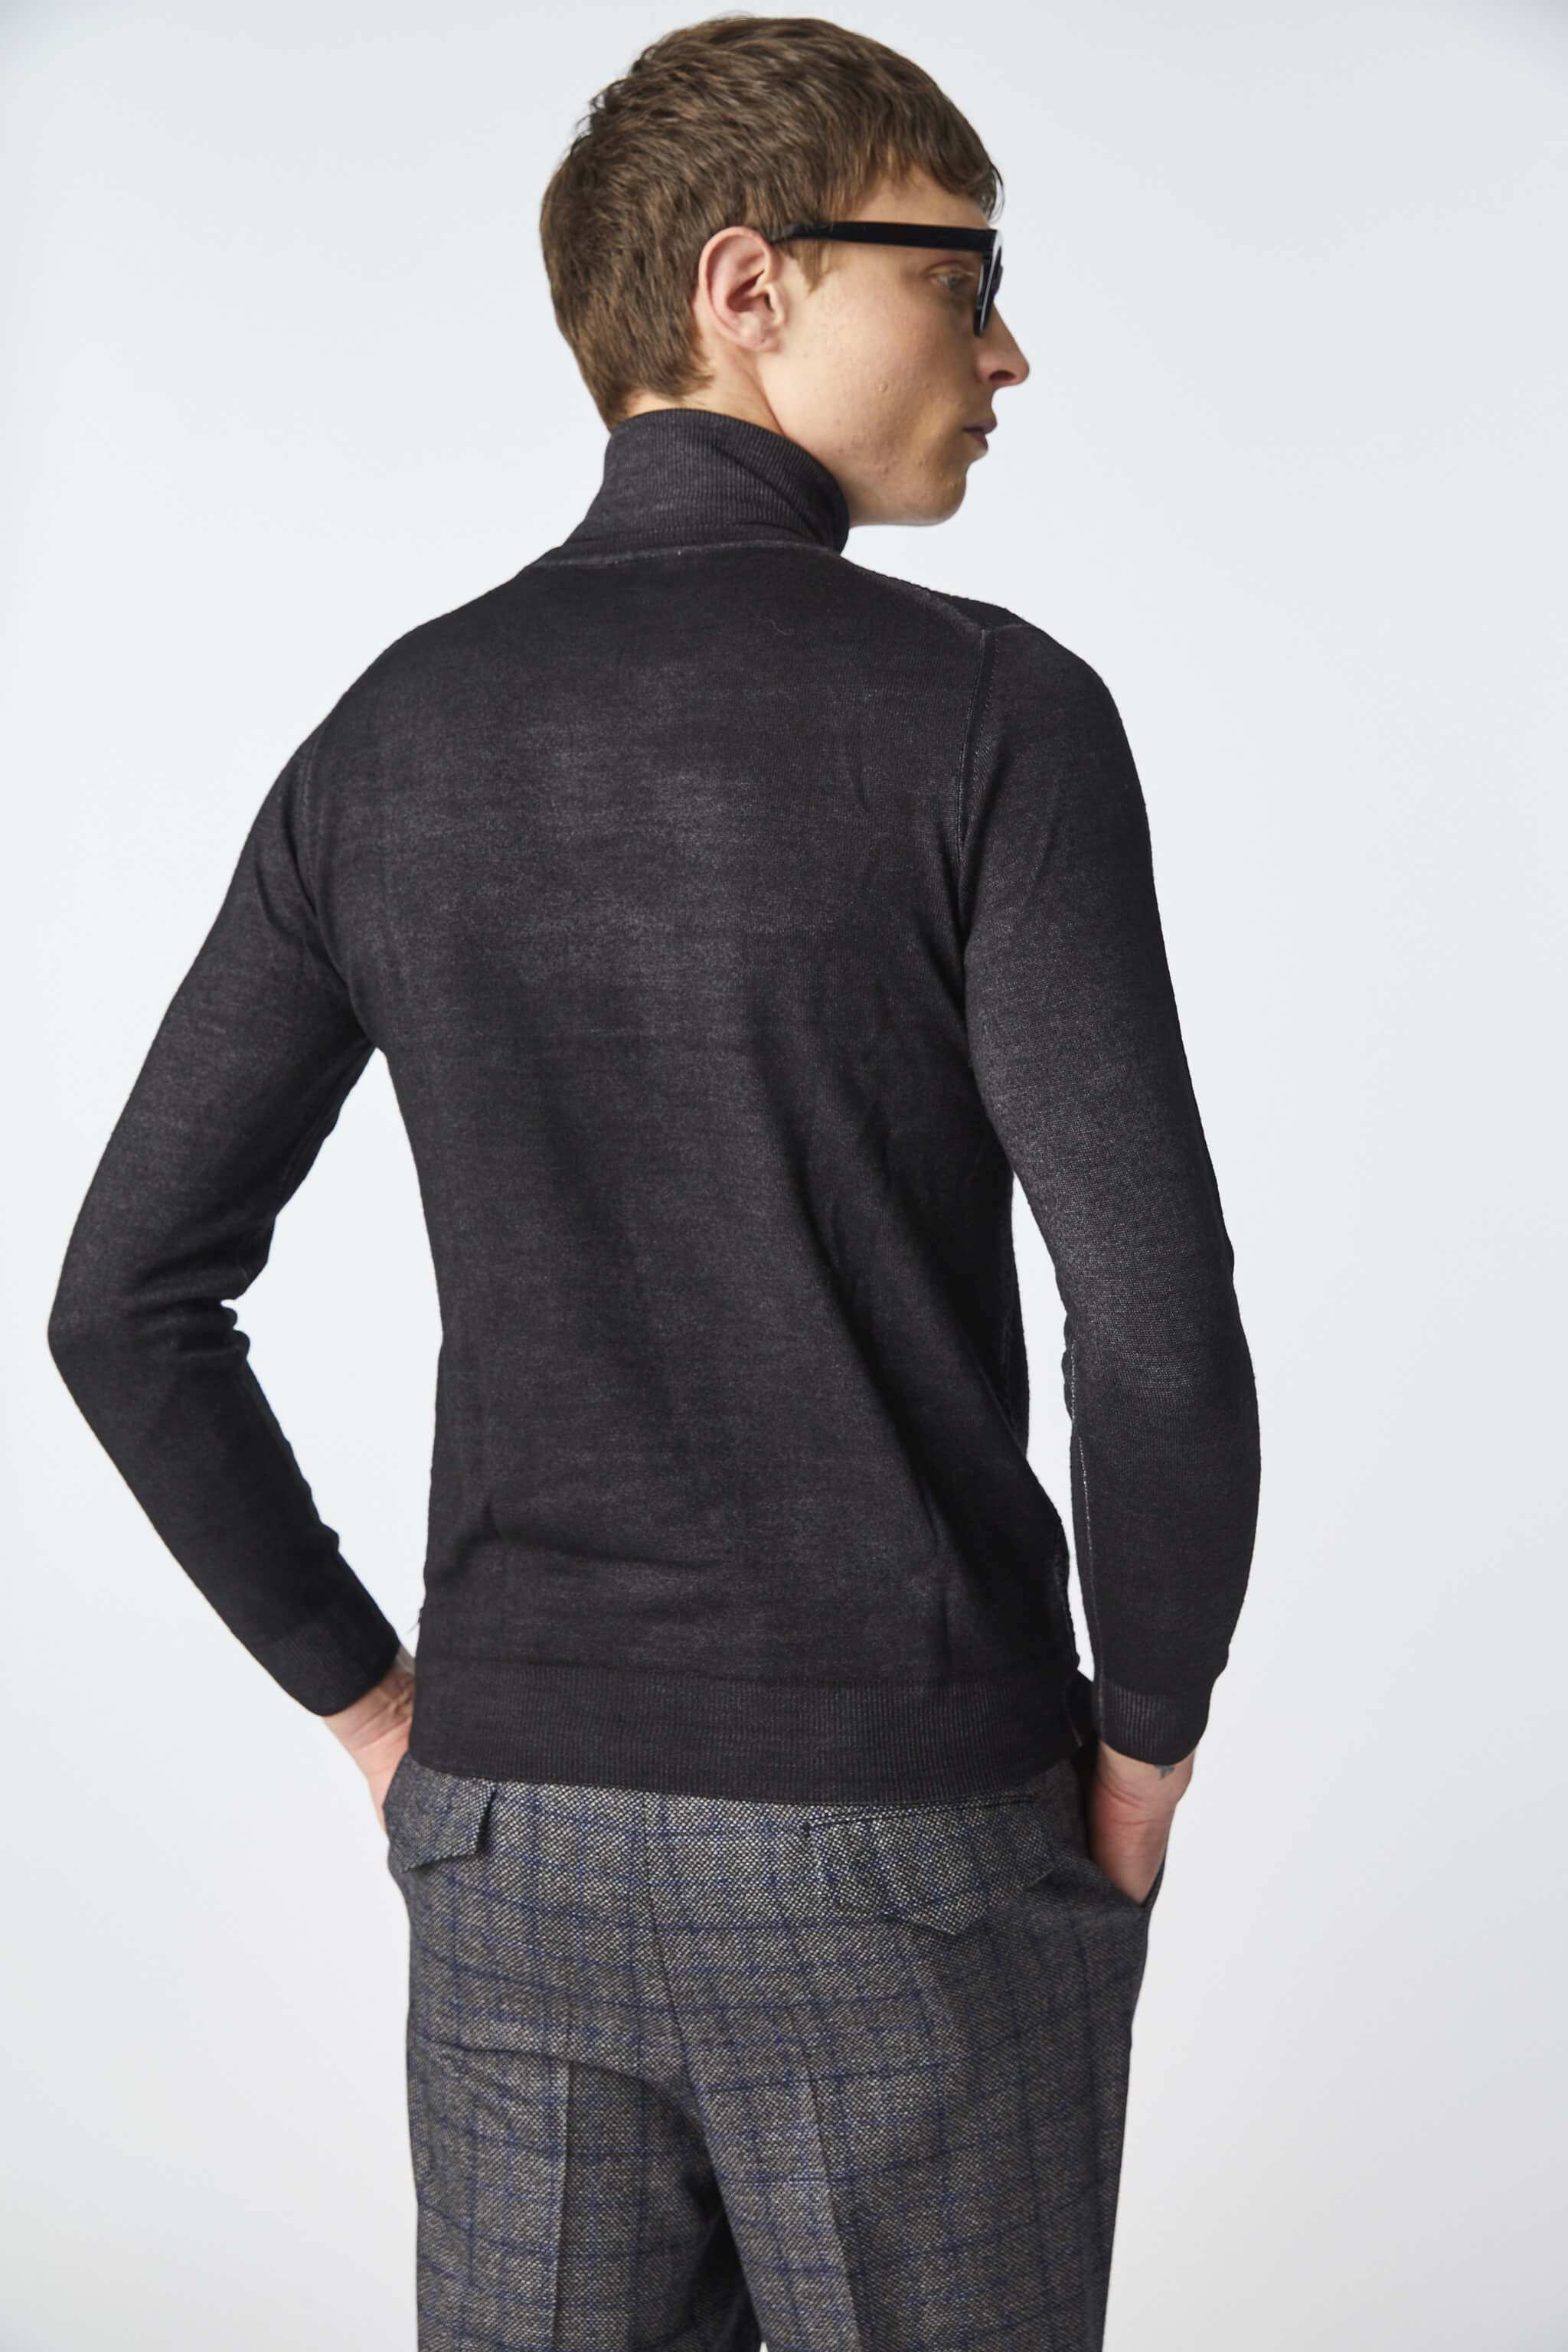 Garment-dyed turtleneck in black